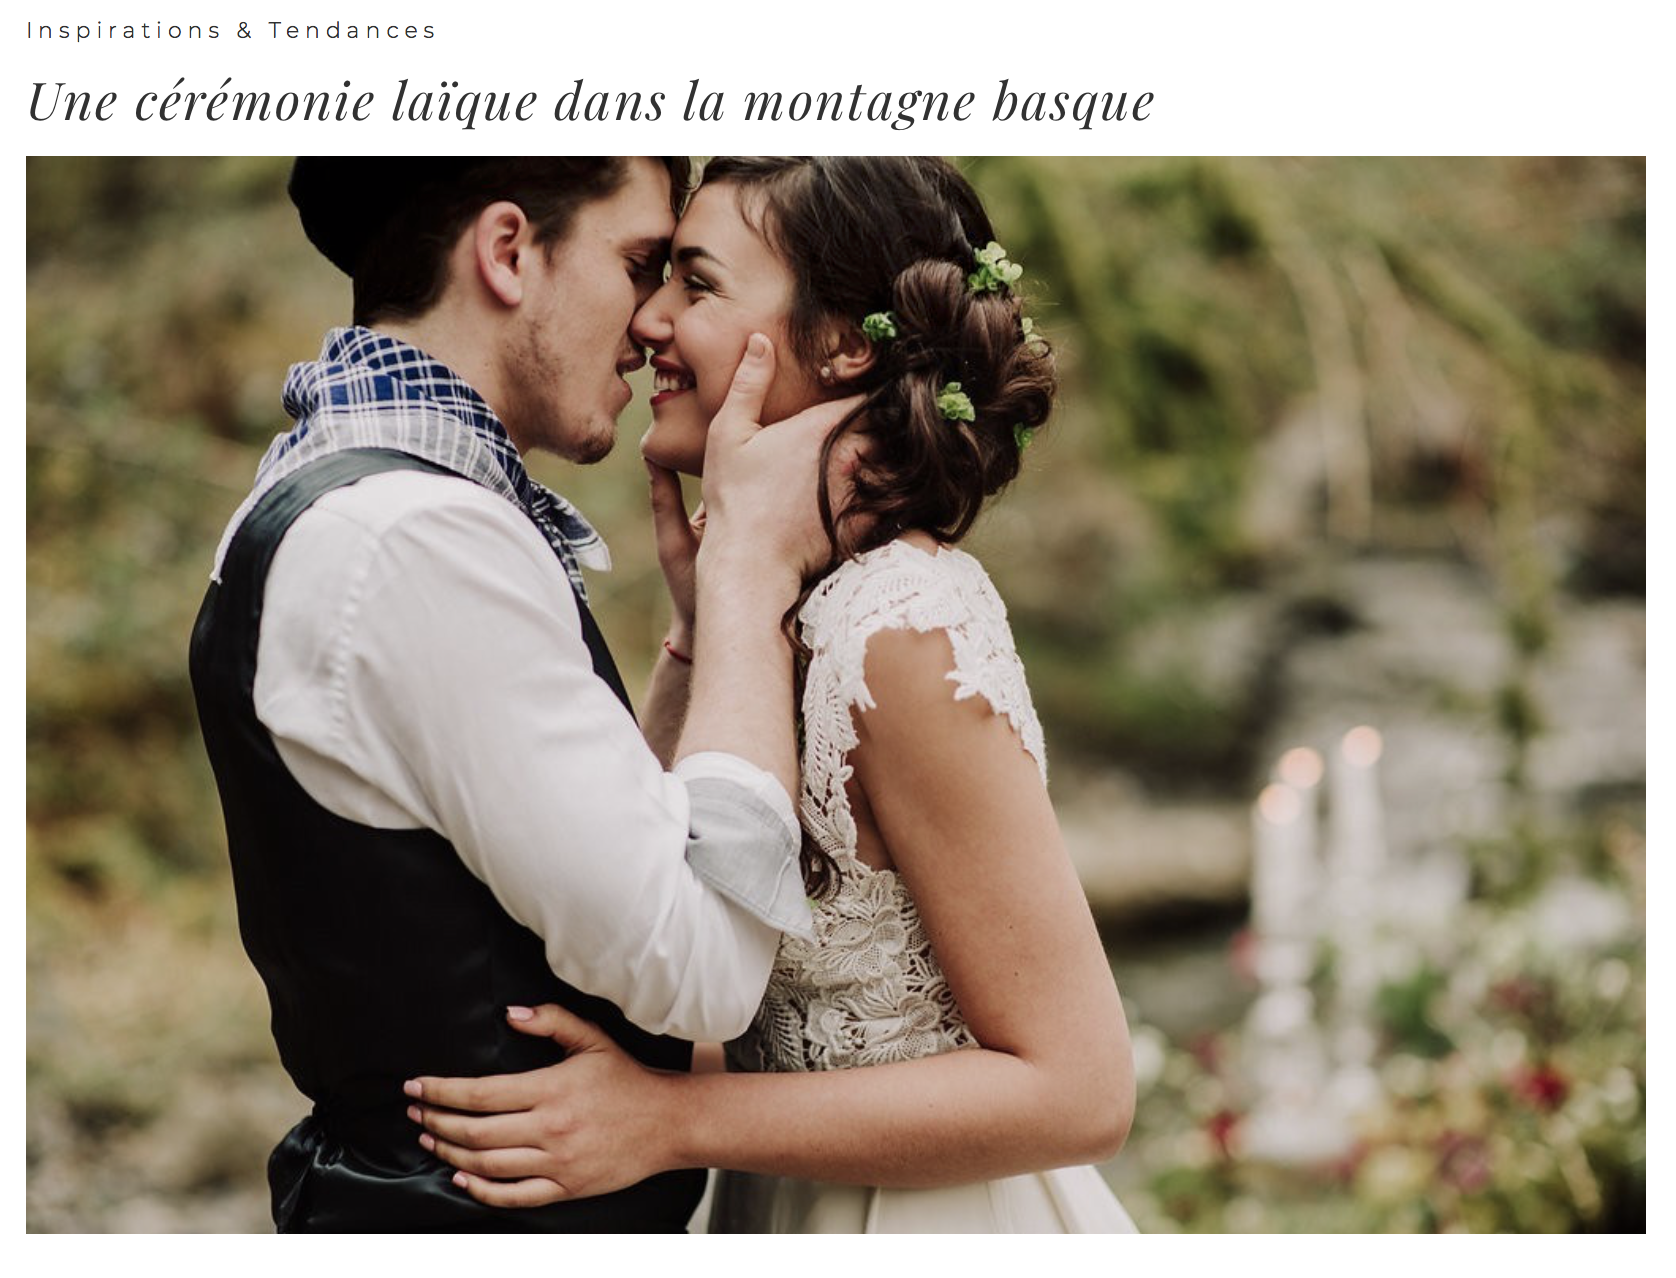 Shooting mariage inspirations basques